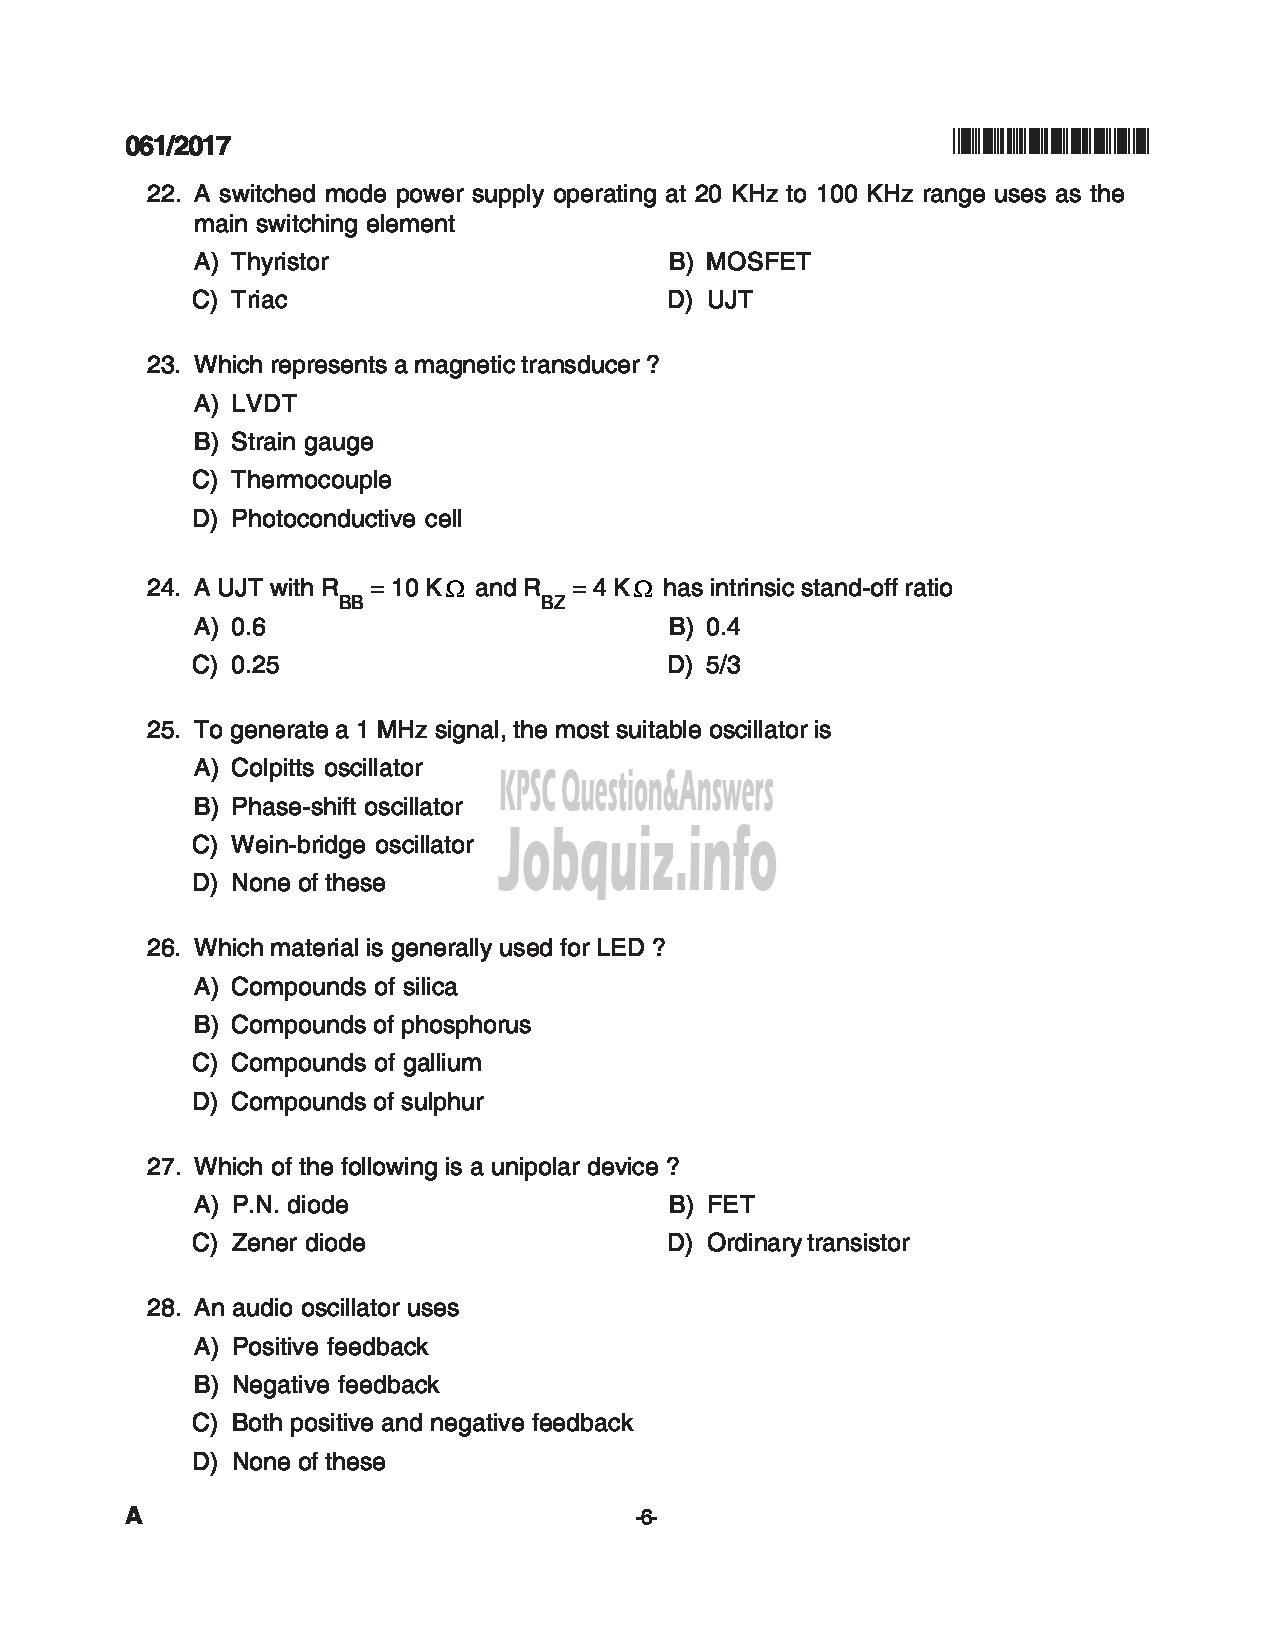 Kerala PSC Question Paper - TRADESMAN ELECTRONICS TECHNICAL EDUCATION QUESTION PAPER-6